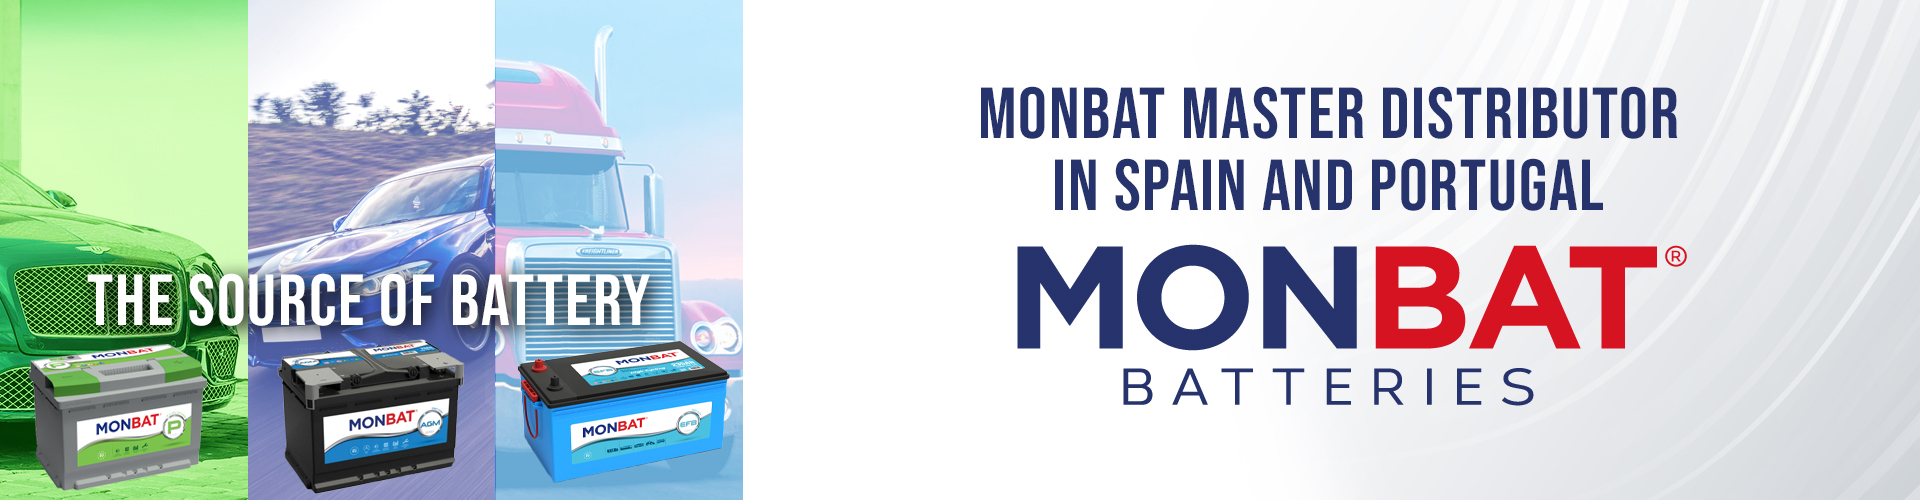 Master distributor of Monbat batteries in Spain and Portugal